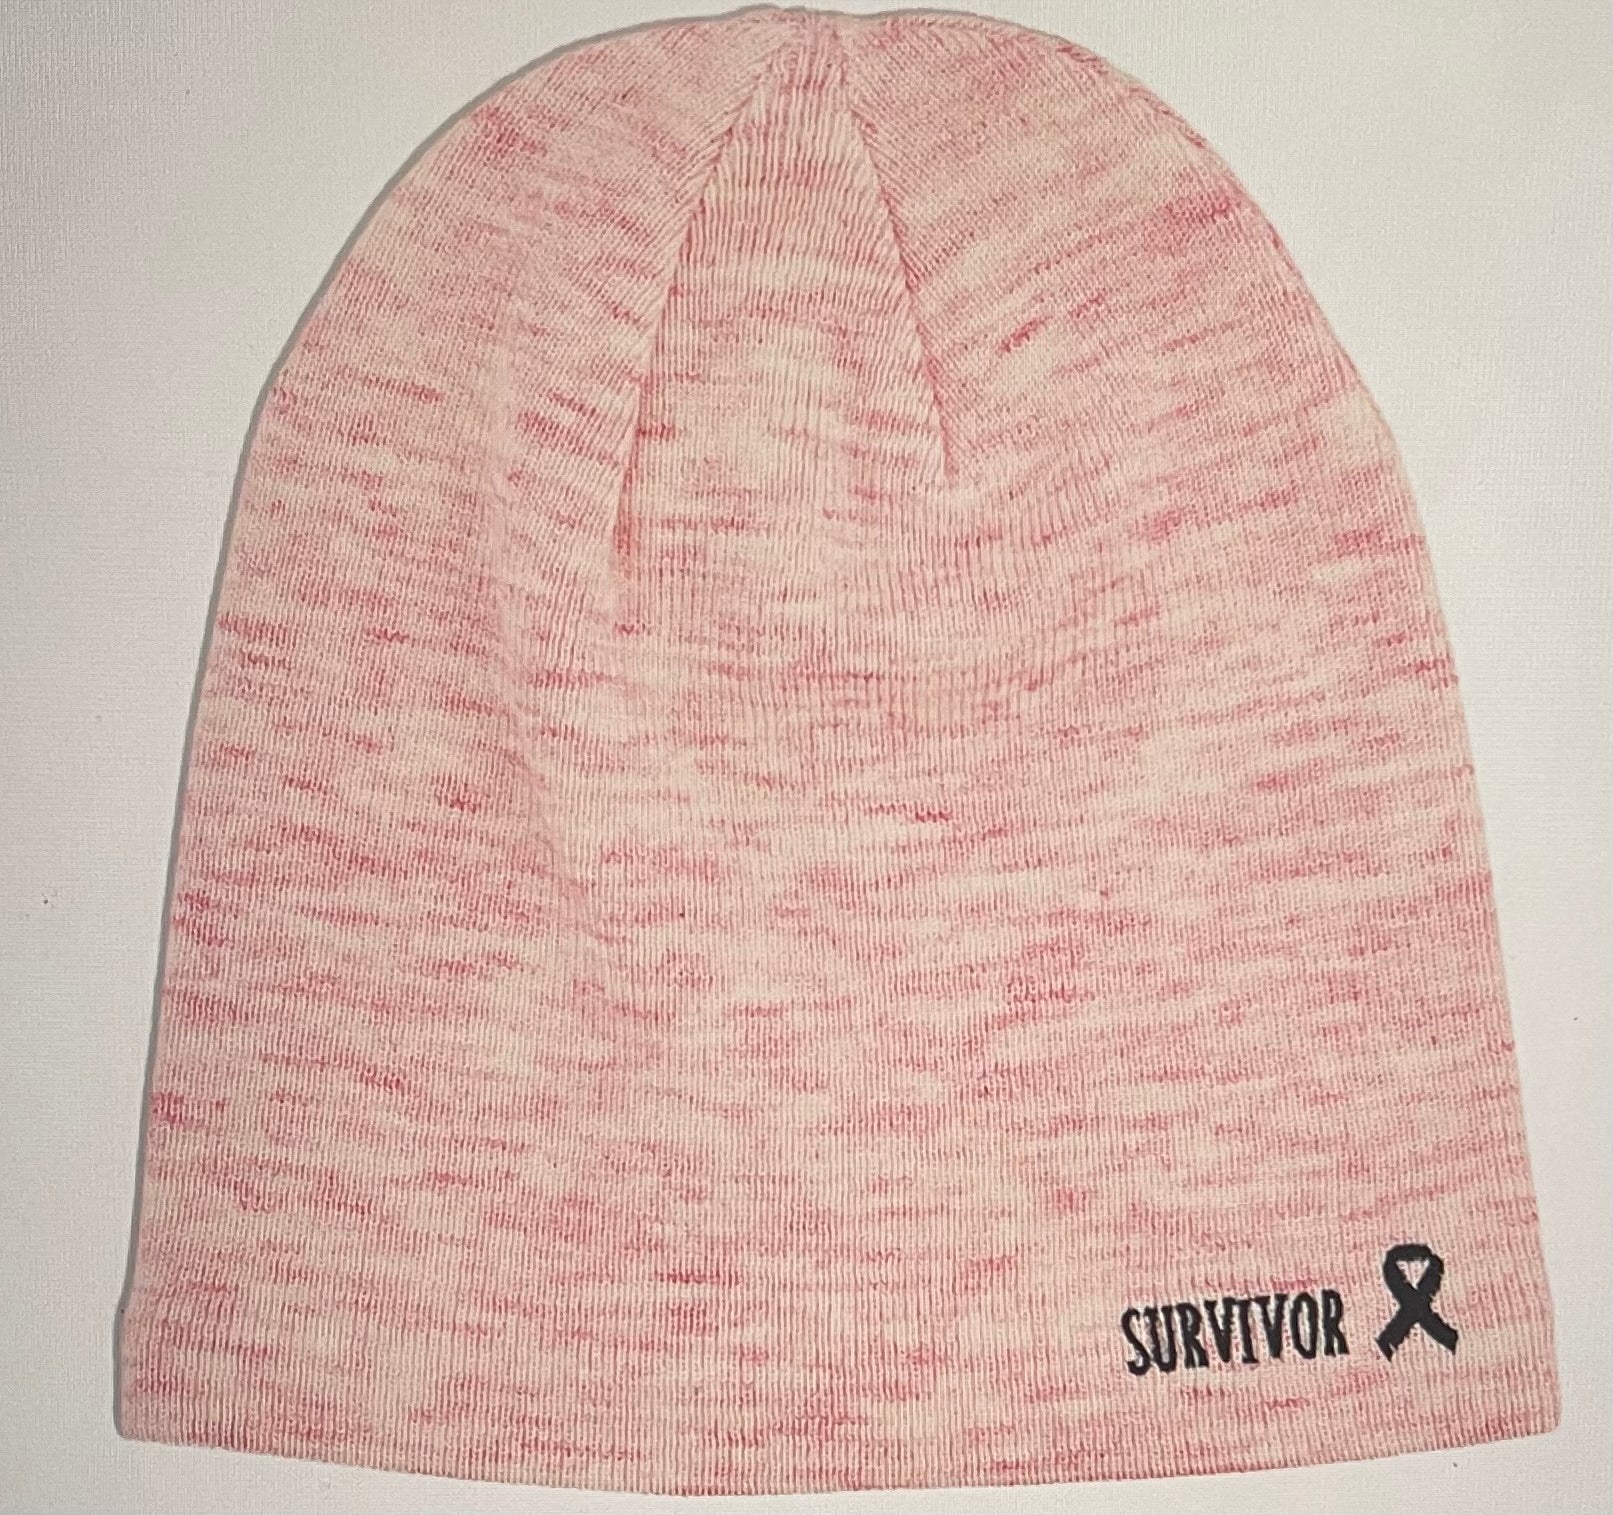 Survivor - Women's Soft Cotton Lined Knitted Beanie